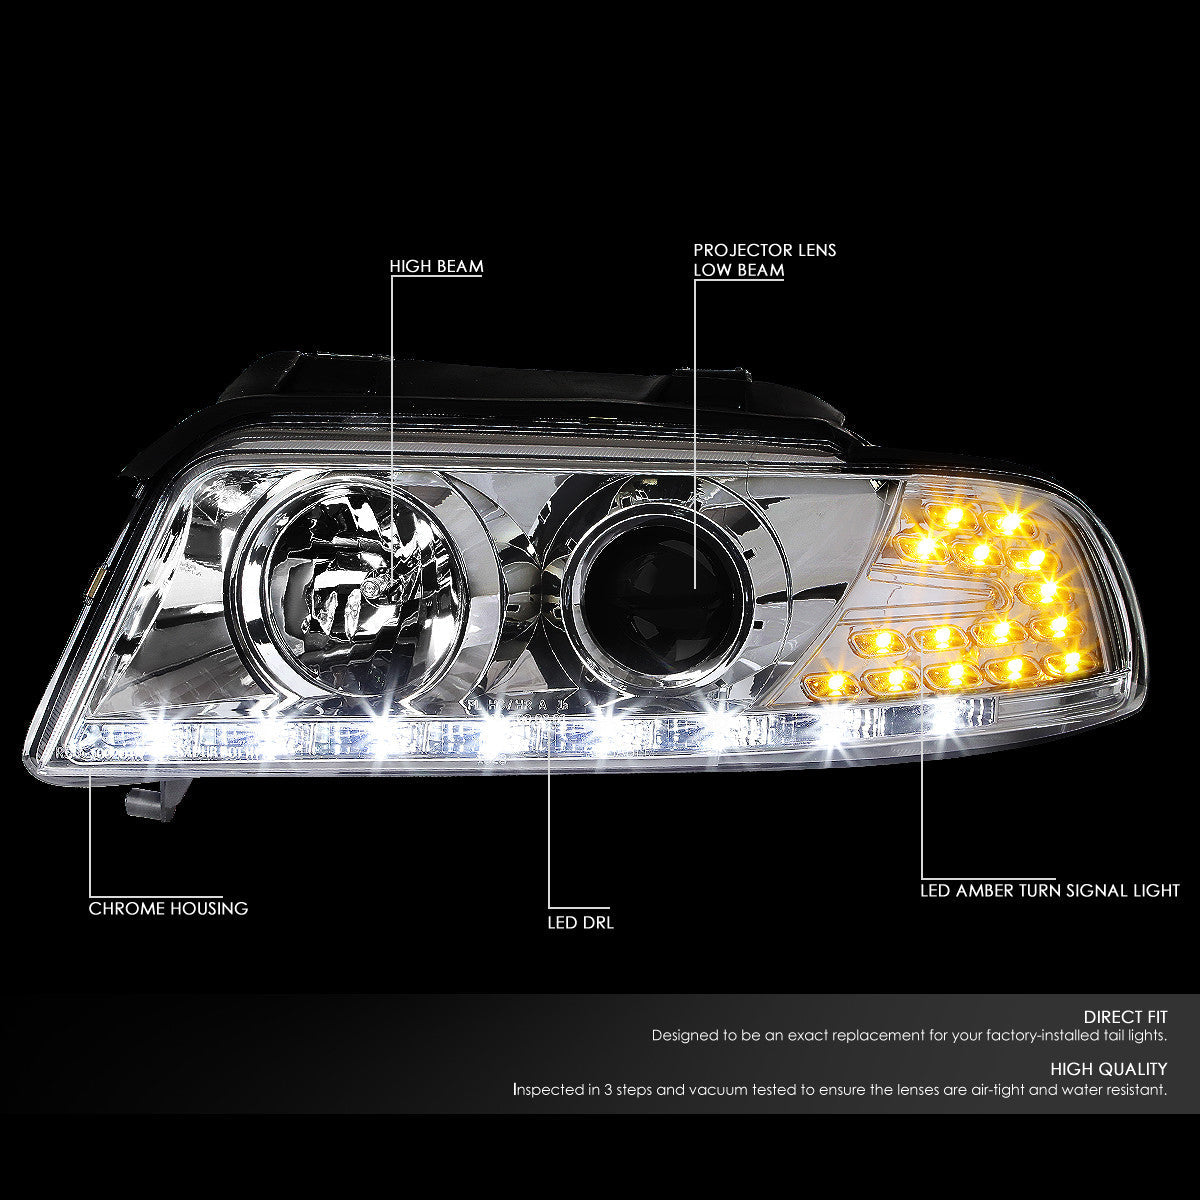 LED DRL Projector Headlights<br>96-01 Audi A4 Quattro